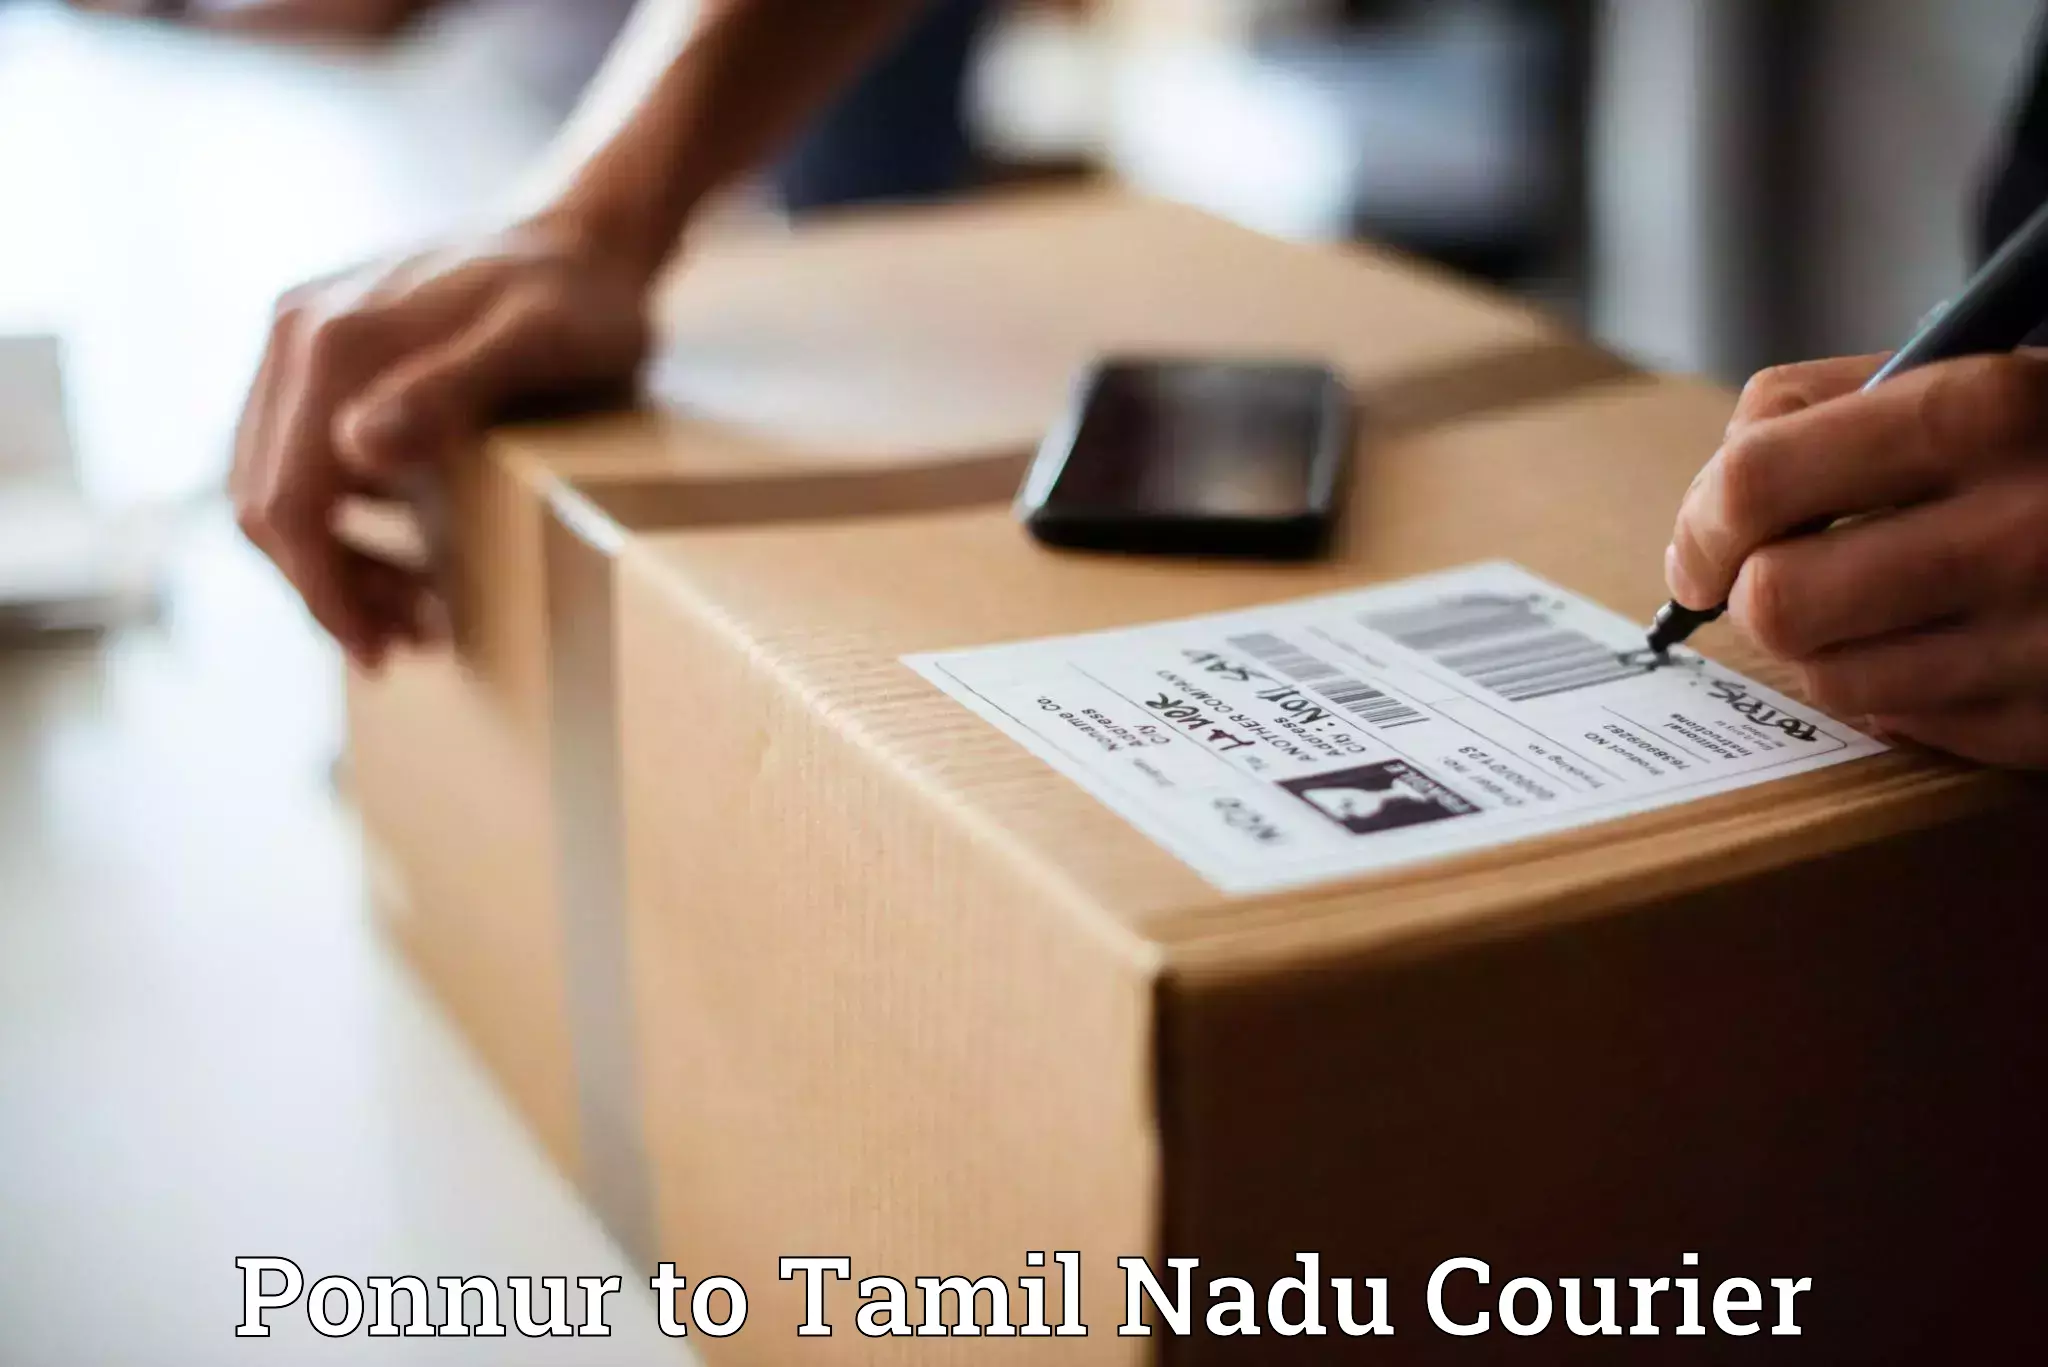 Subscription-based courier Ponnur to Tamil Nadu